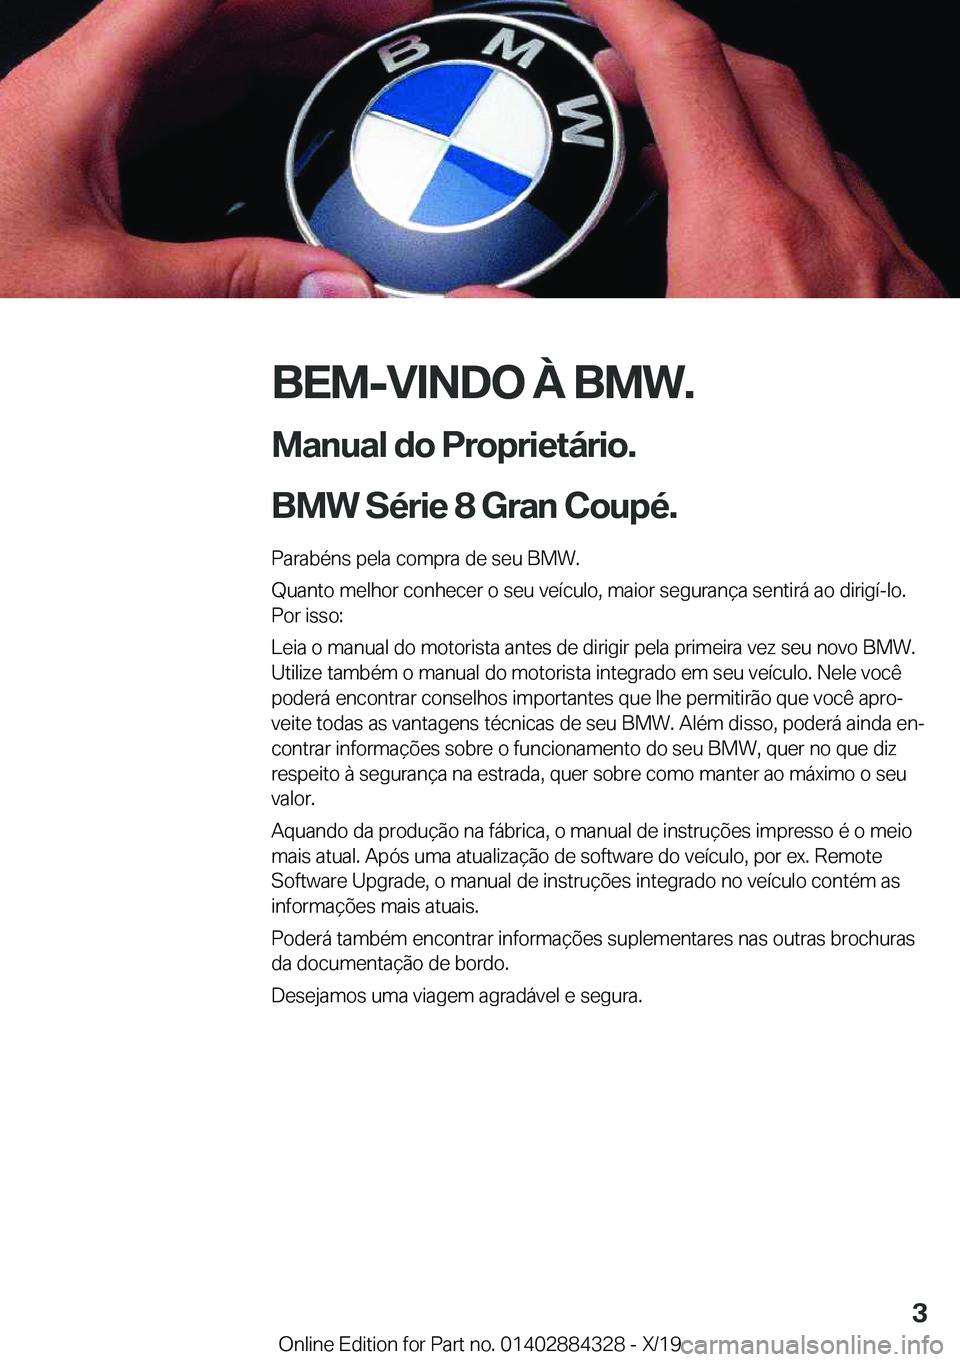 BMW 8 SERIES GRAN COUPE 2020  Manual do condutor (in Portuguese) �B�E�M�-�V�I�N�D�O��À��B�M�W�.
�M�a�n�u�a�l��d�o��P�r�o�p�r�i�e�t�á�r�i�o�.
�B�M�W��S�é�r�i�e��8��G�r�a�n��C�o�u�p�é�. �P�a�r�a�b�é�n�s��p�e�l�a��c�o�m�p�r�a��d�e��s�e�u��B�M�W�.�Q�u